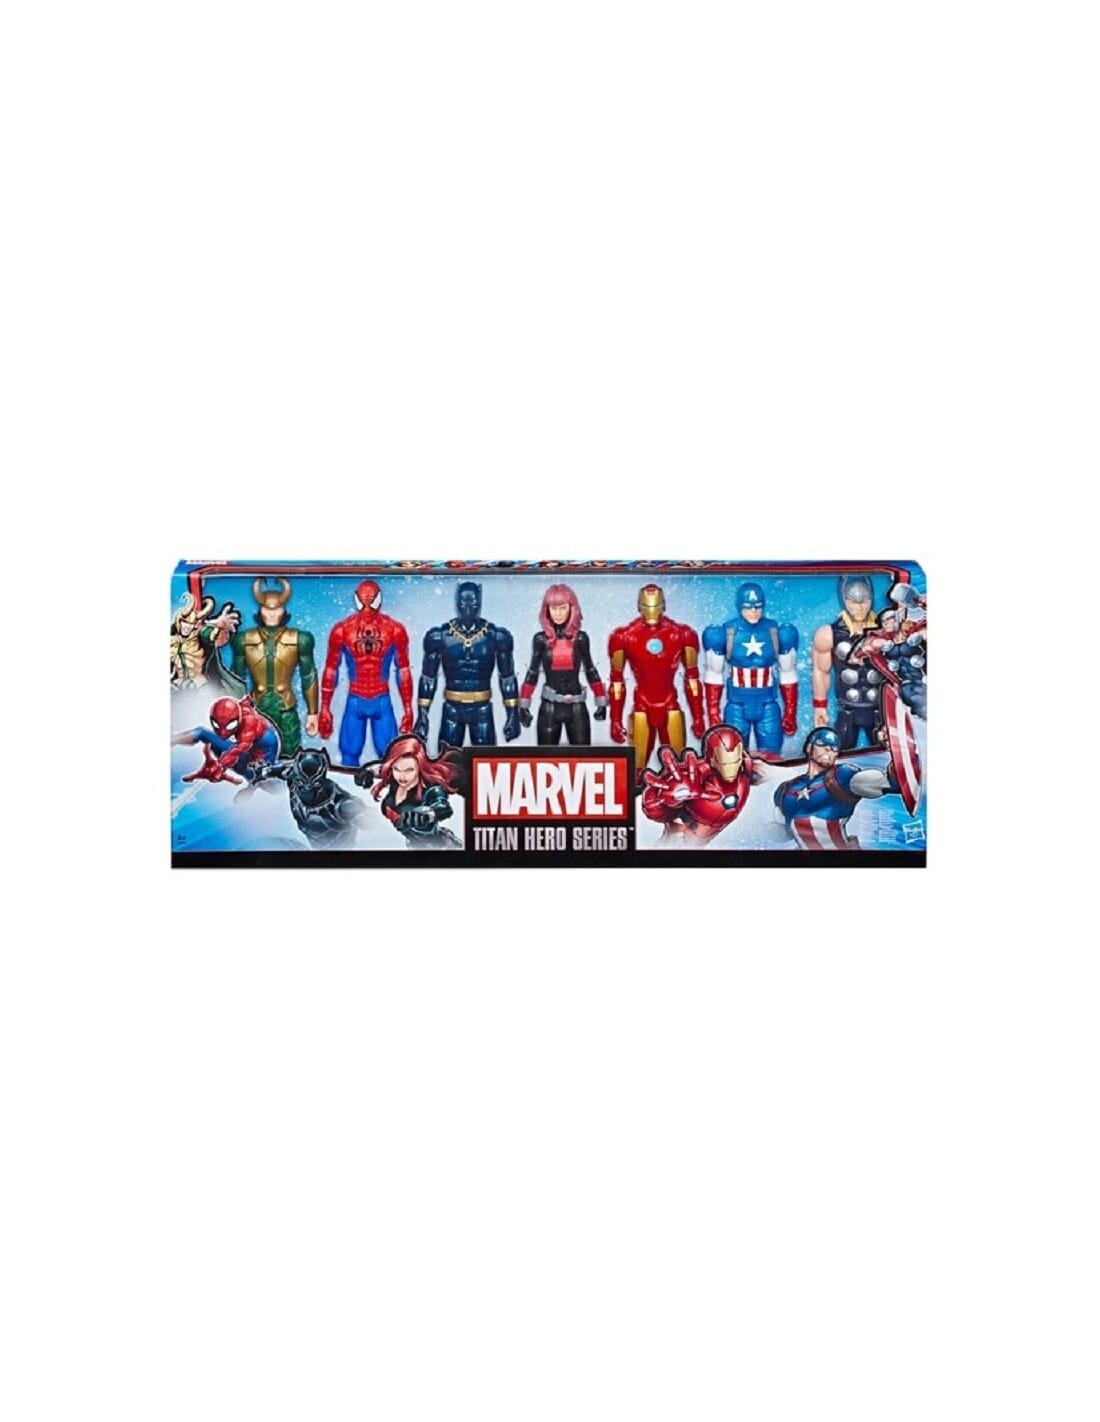 Avengers Titan Heros HASBRO toysvaldichiana.it 